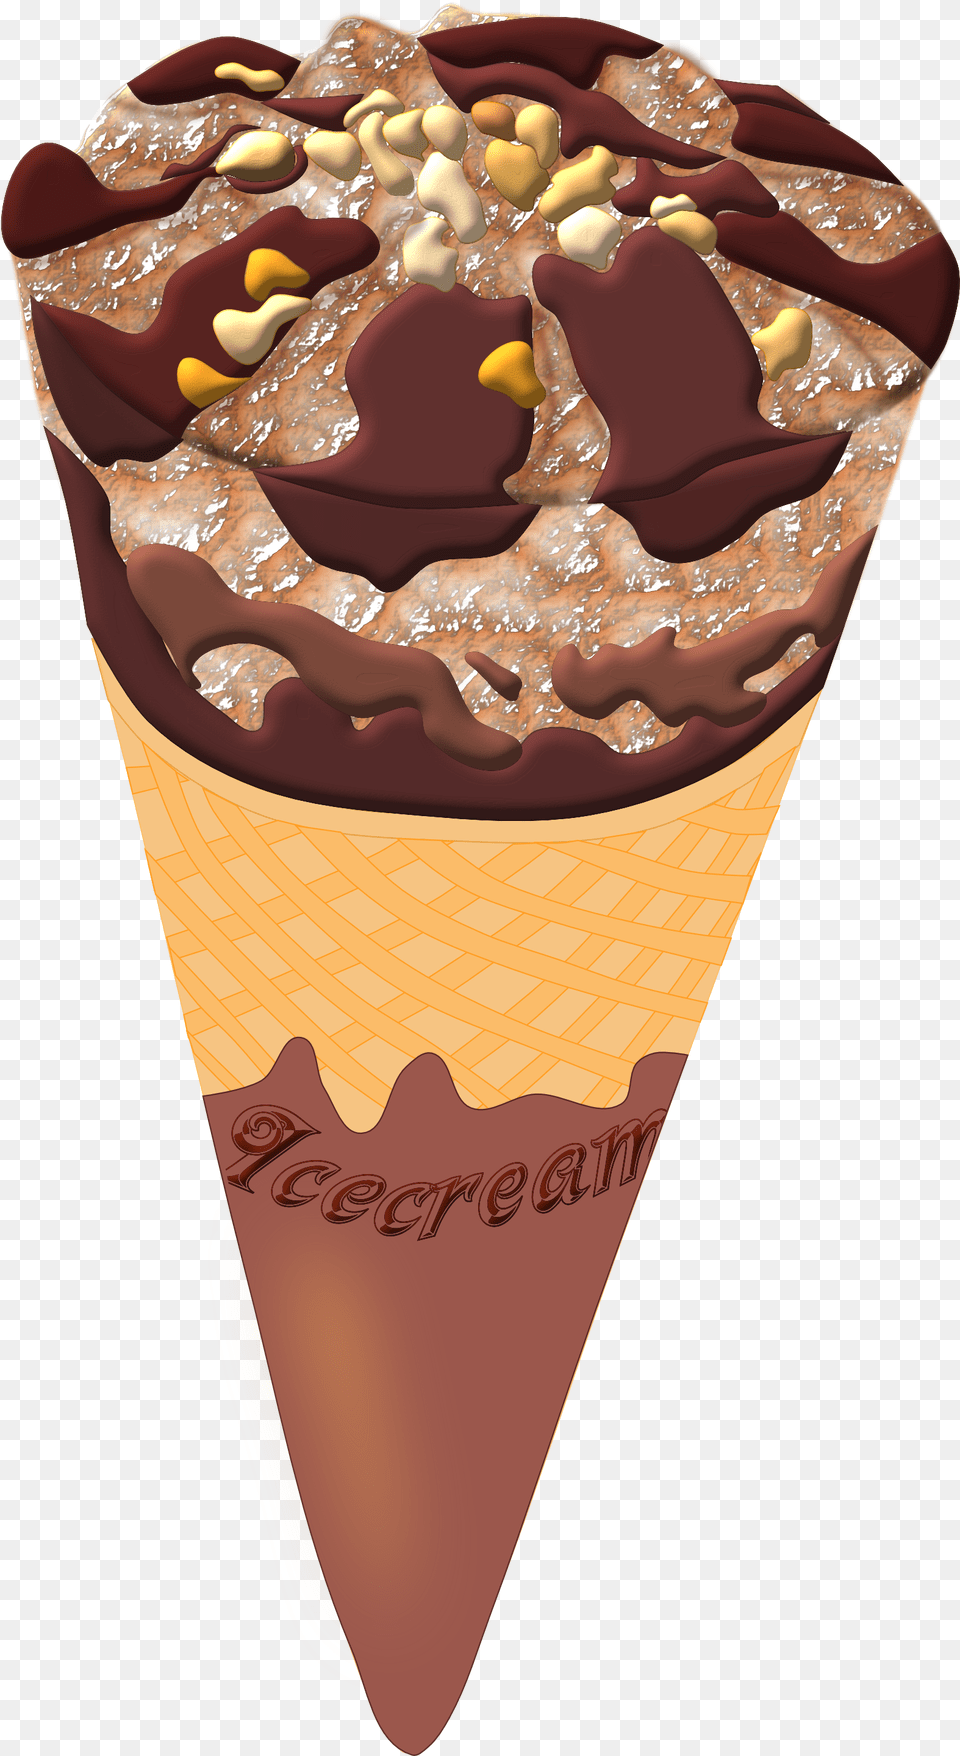 Ice Cream Image Ice Cream Cone Hd, Dessert, Food, Ice Cream Png